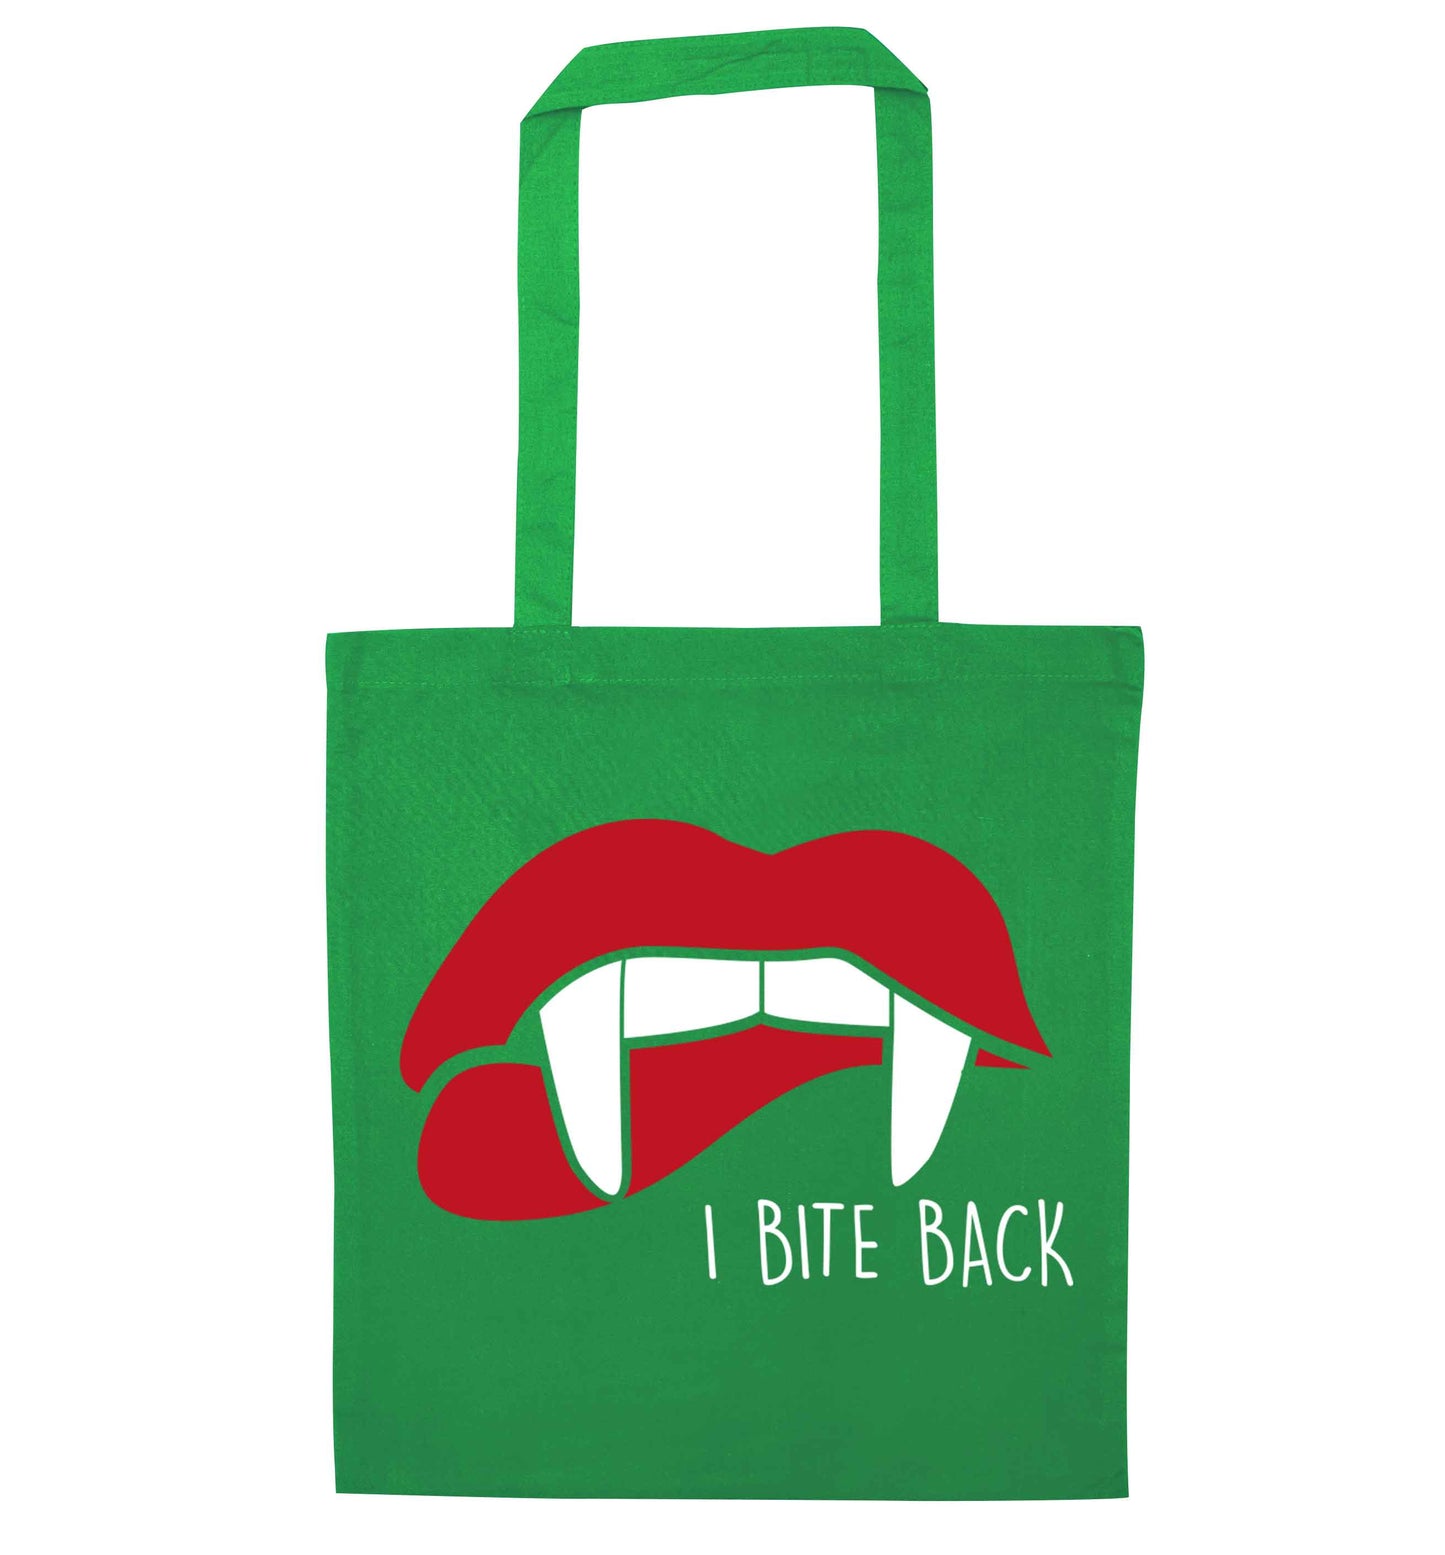 I bite back green tote bag